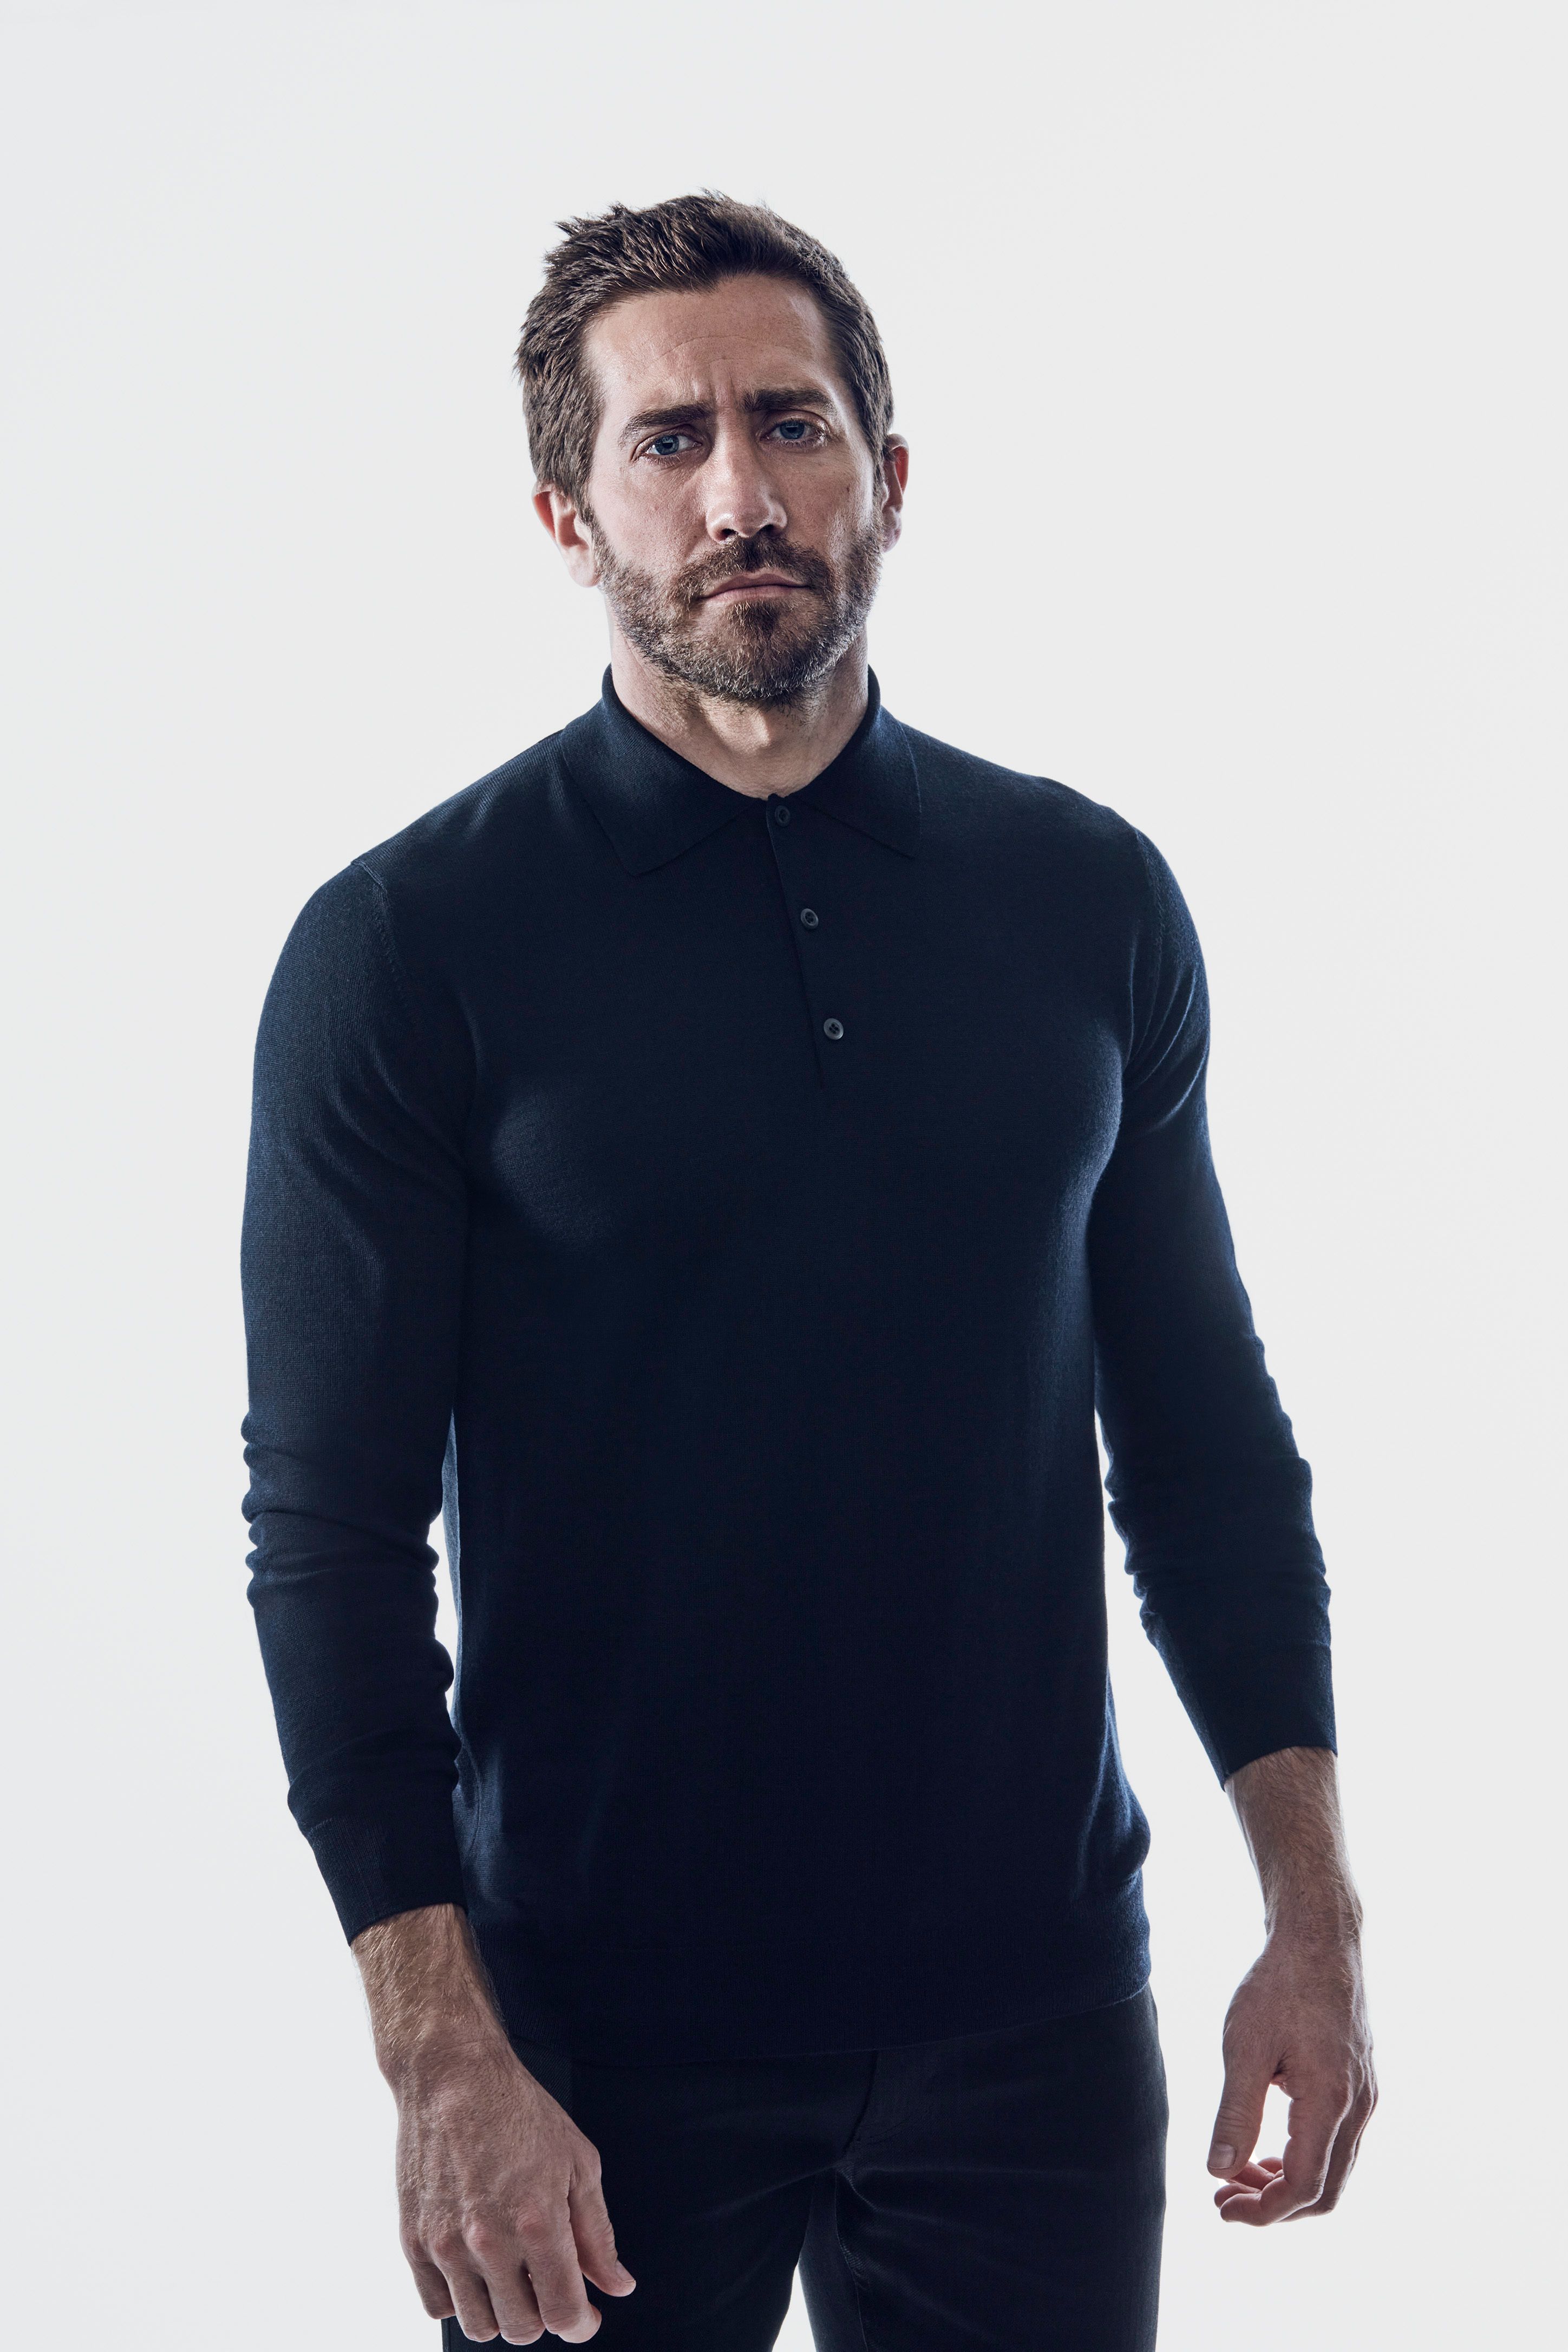 Jake Gyllenhaal on Prada Luna Rossa Fragrance, The Guilty, and Adventures